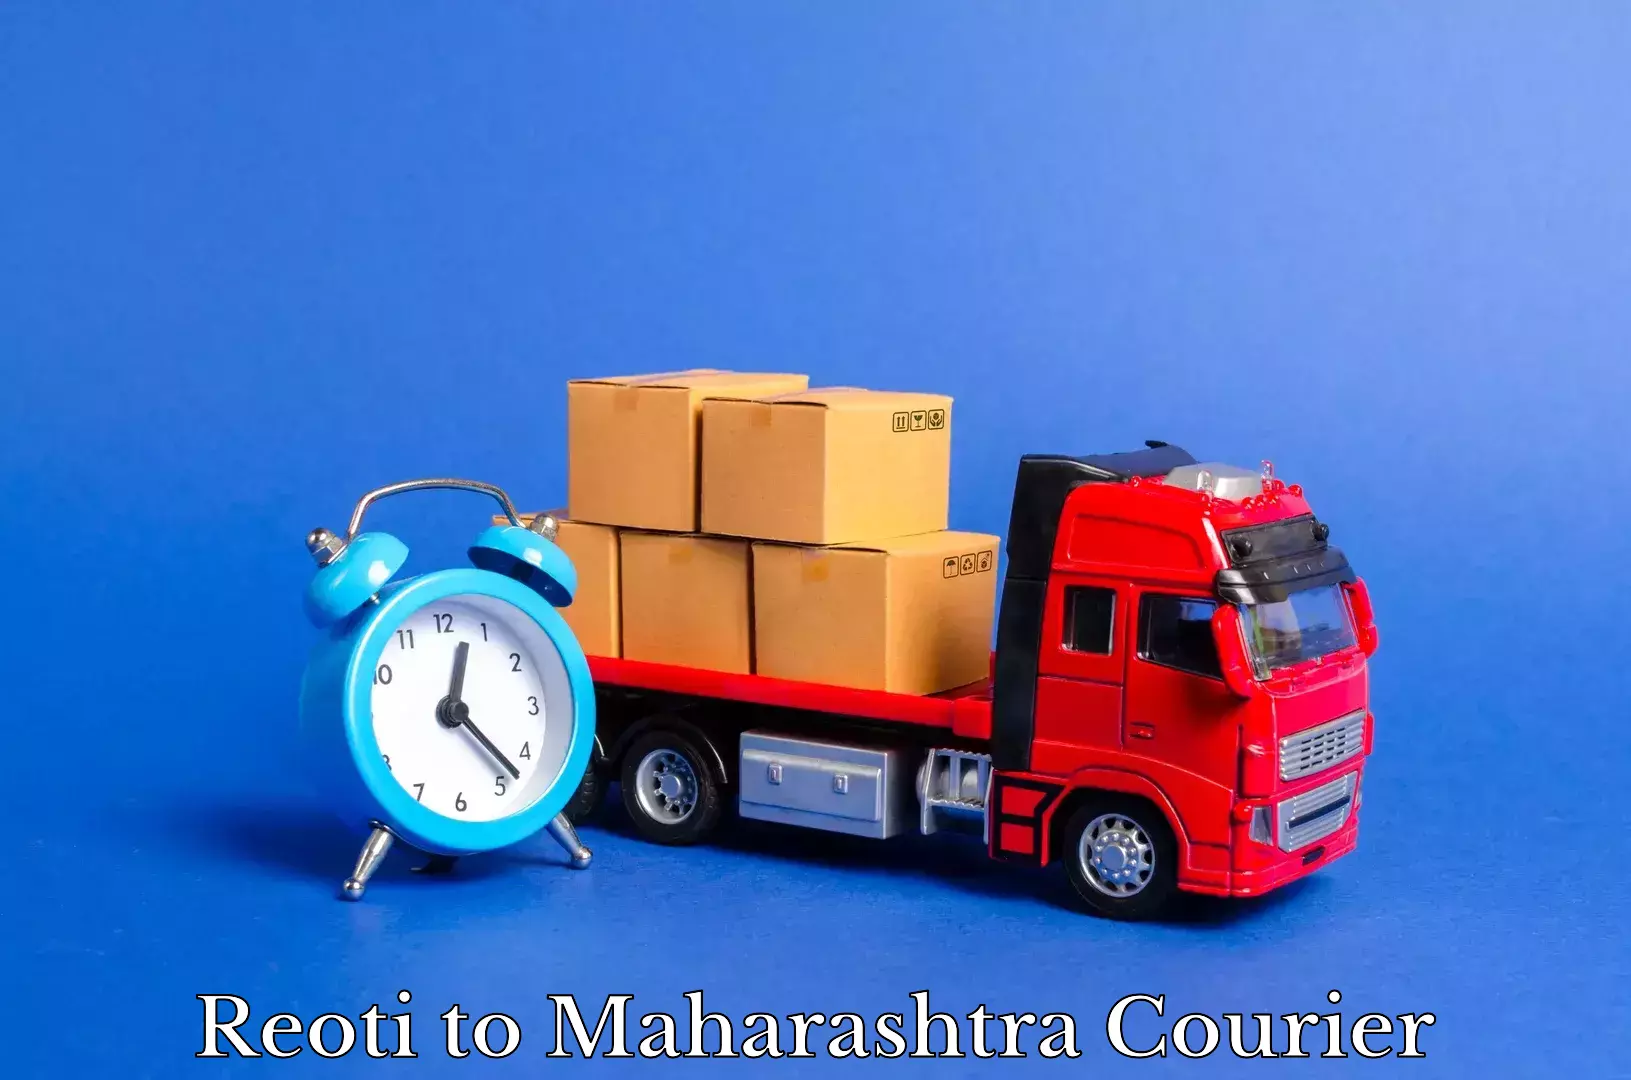 Professional movers in Reoti to Maharashtra